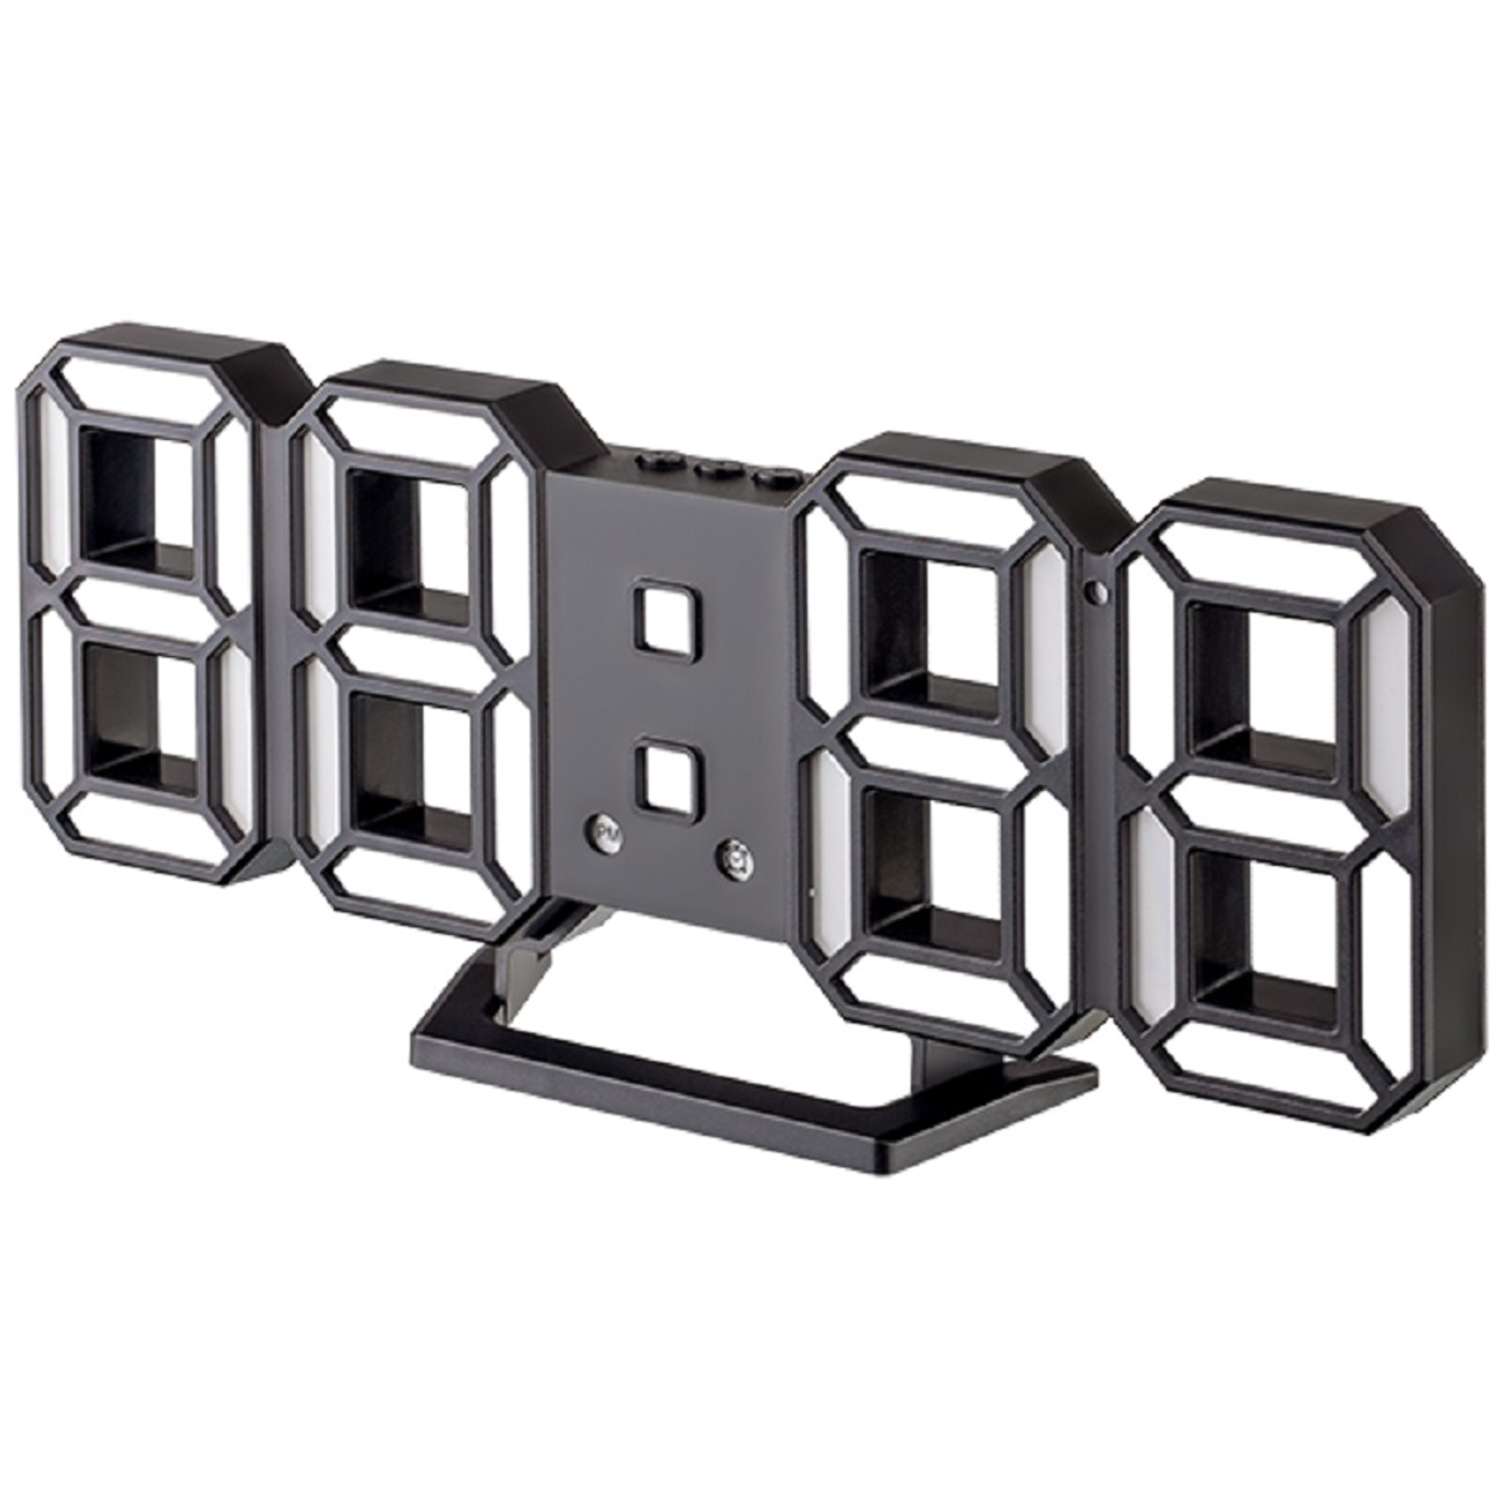 LED часы-будильник Perfeo LUMINOUS 2 черный корпус белая подсветка PF-6111 - фото 1